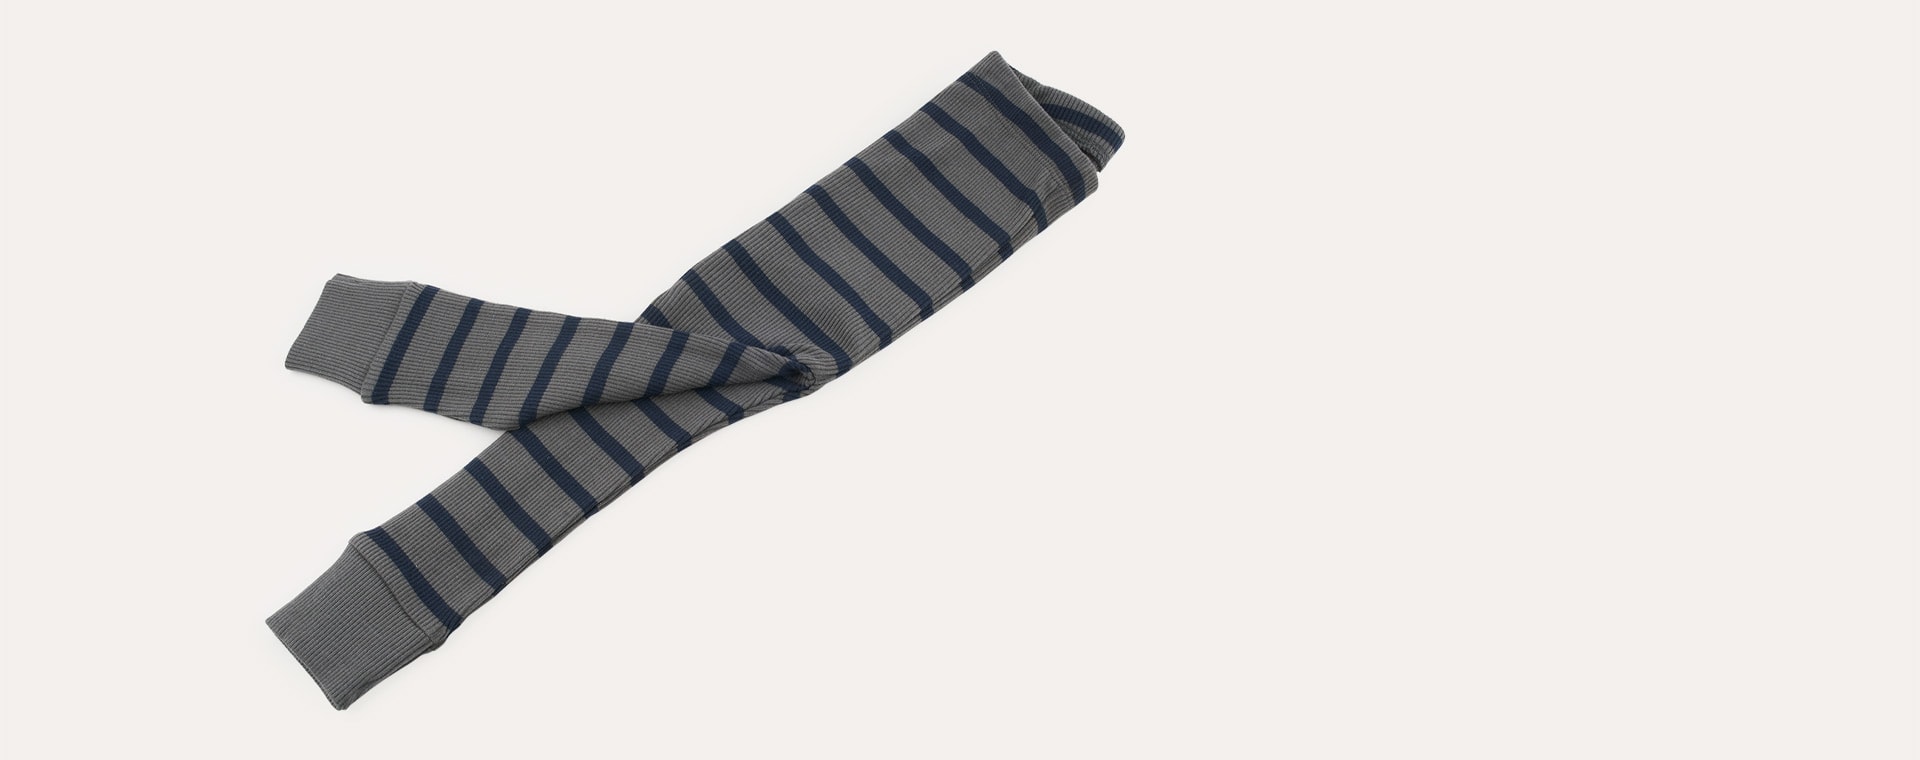 Navy/Grey Stripe KIDLY Label Organic Ribbed Legging